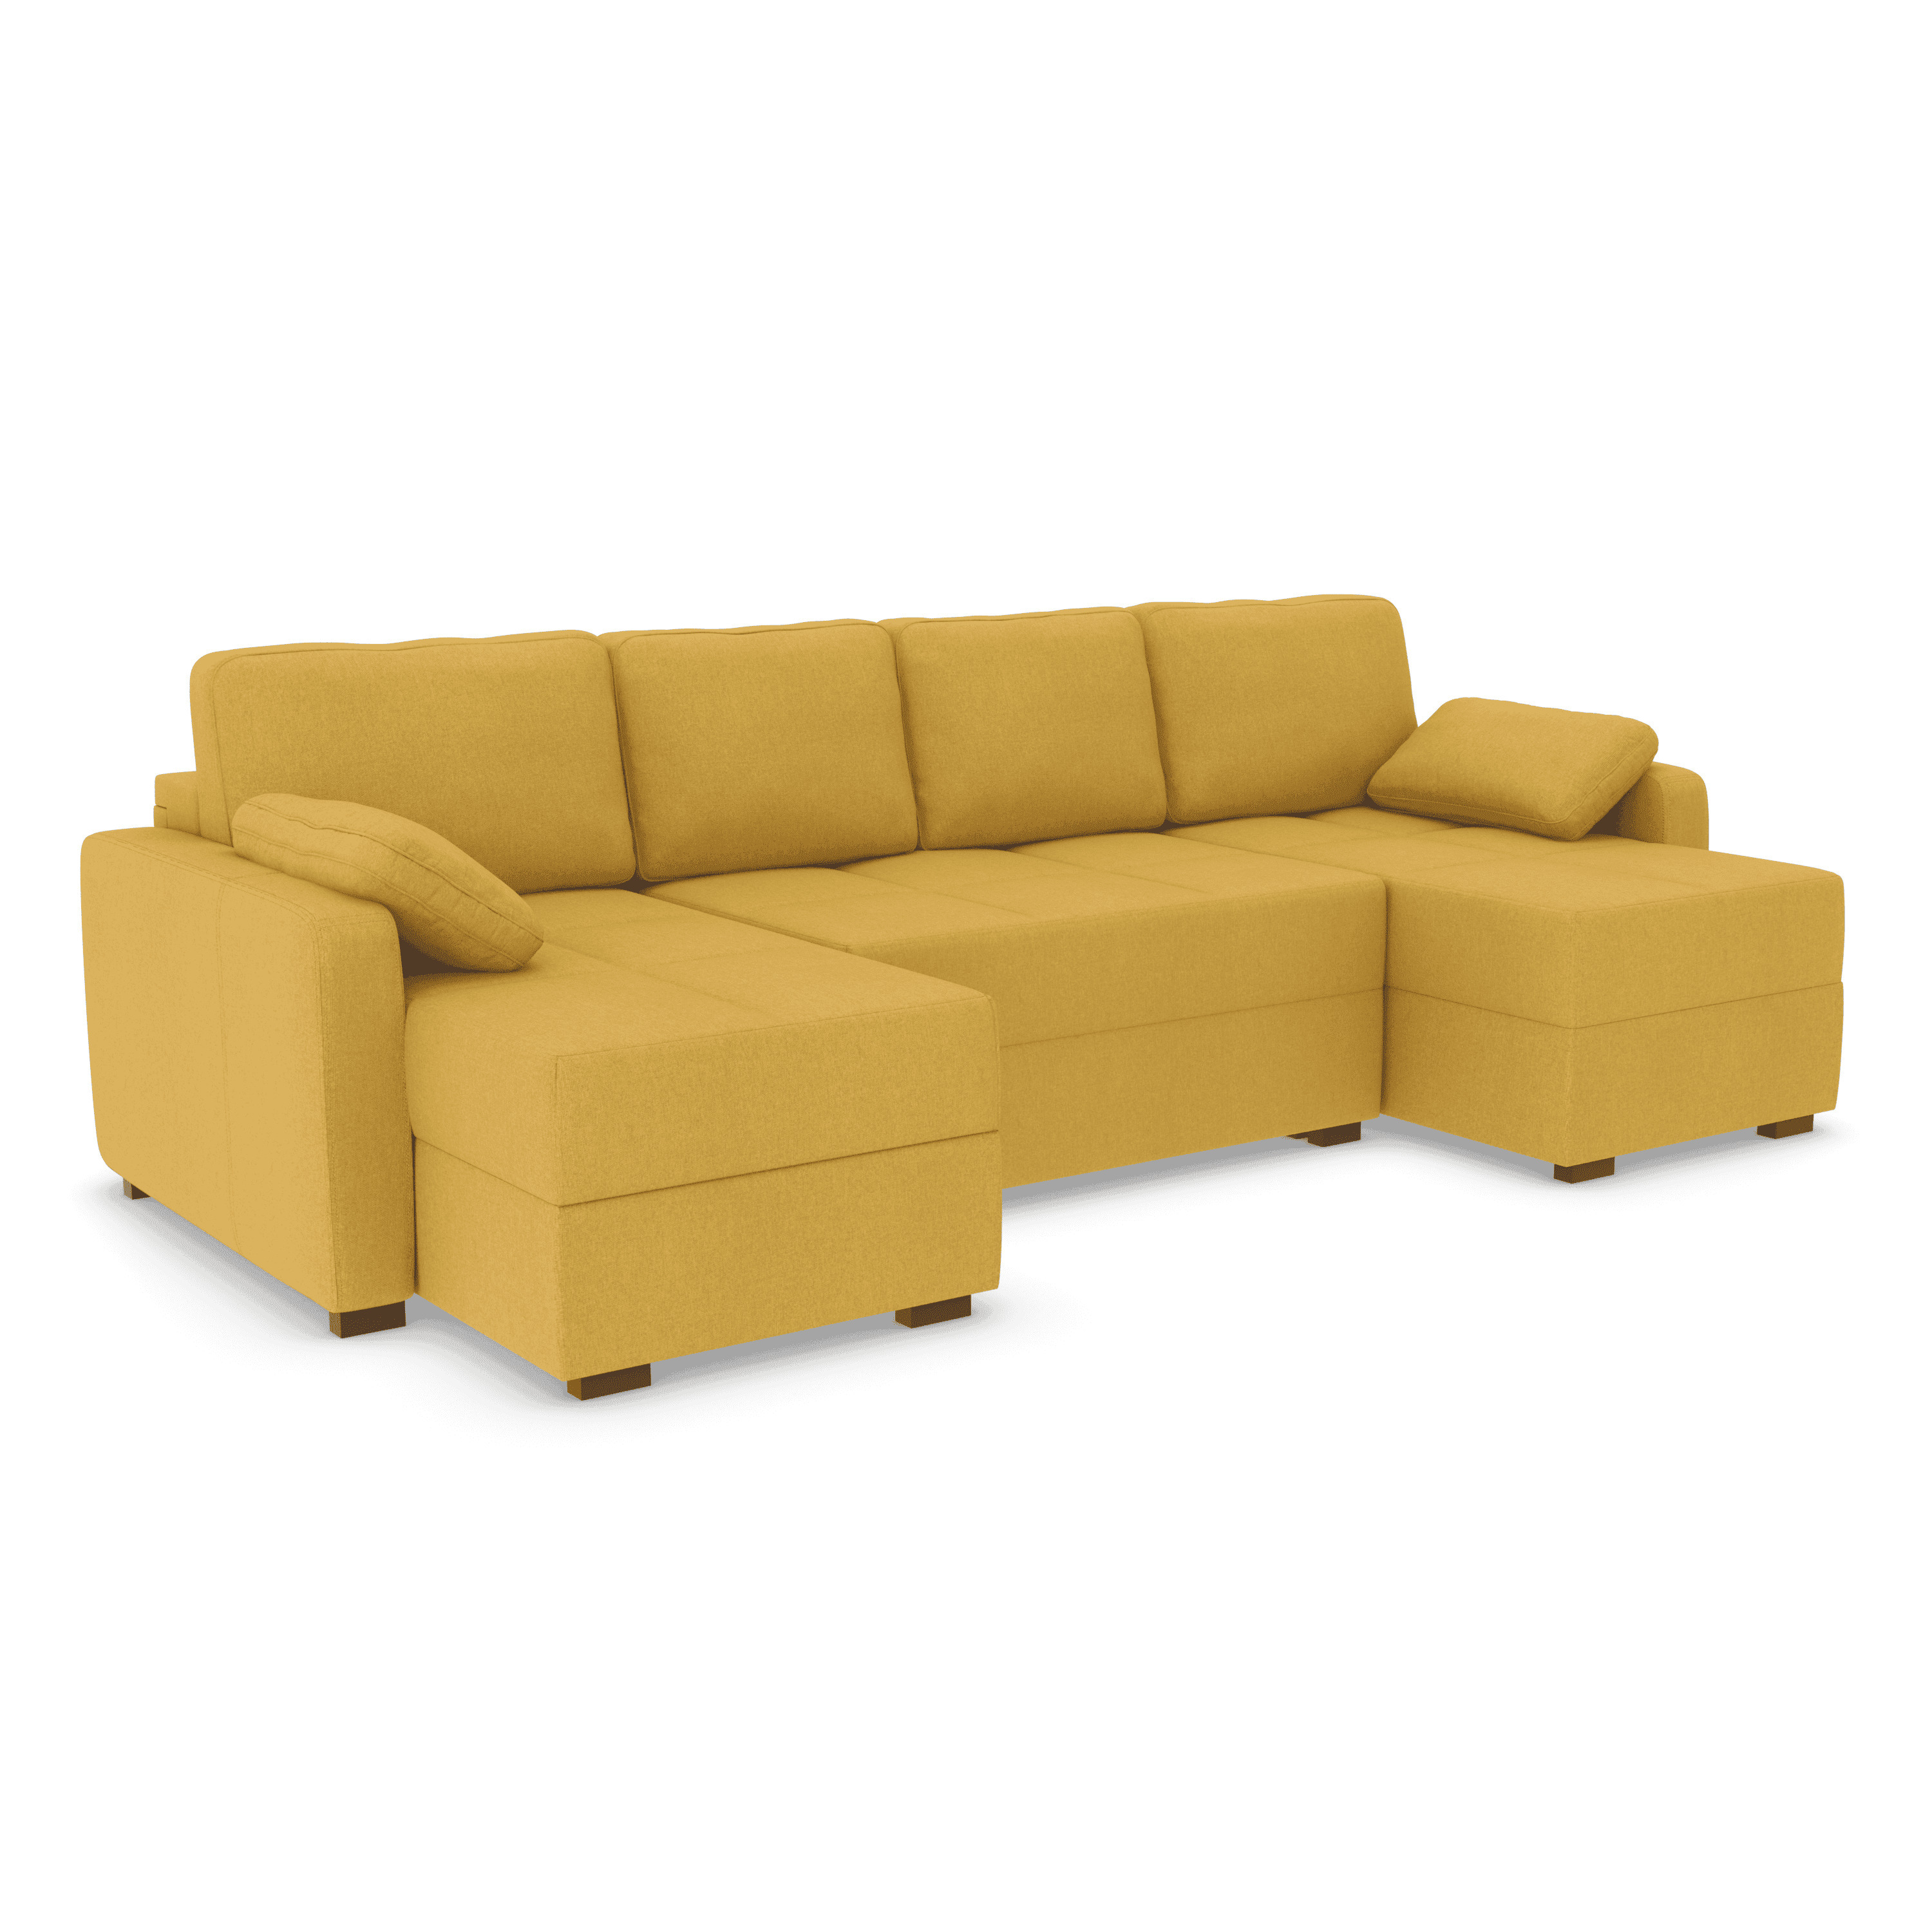 Harry Large Corner Modular Sofa Bed - Sunflower - image 1